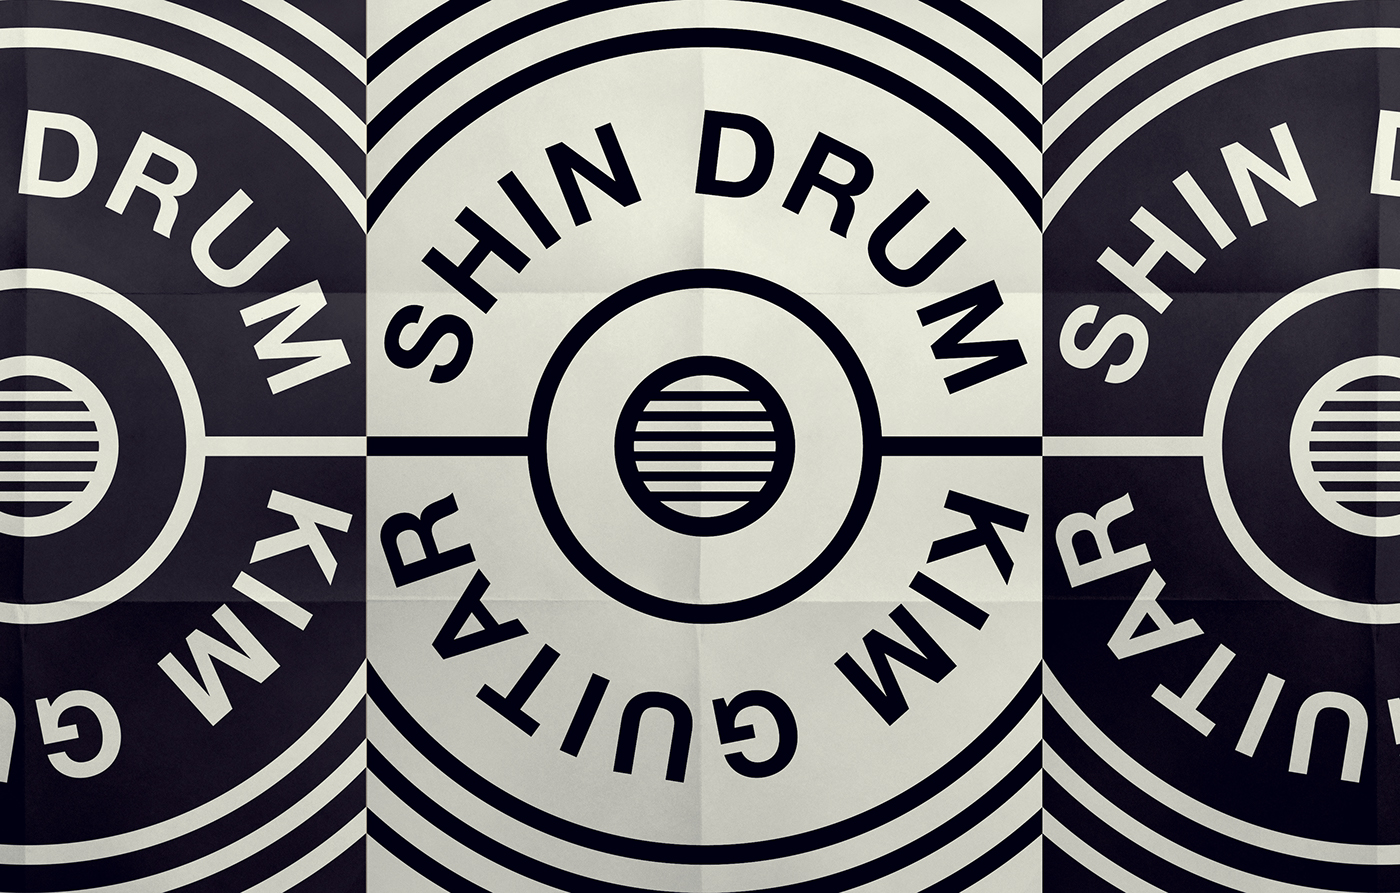 drum musicians circle guitar black and white band record pictogram cap new era cap logo canvas bag